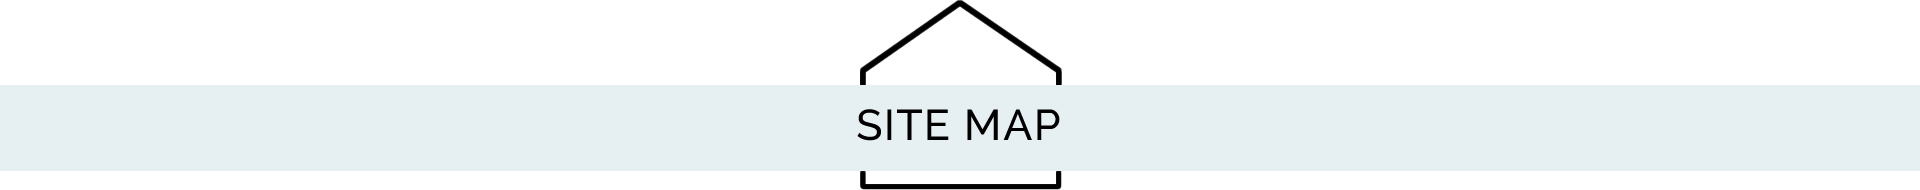 Site Map - Sweet Home Organizing & Redecorating, Jasper Georgia